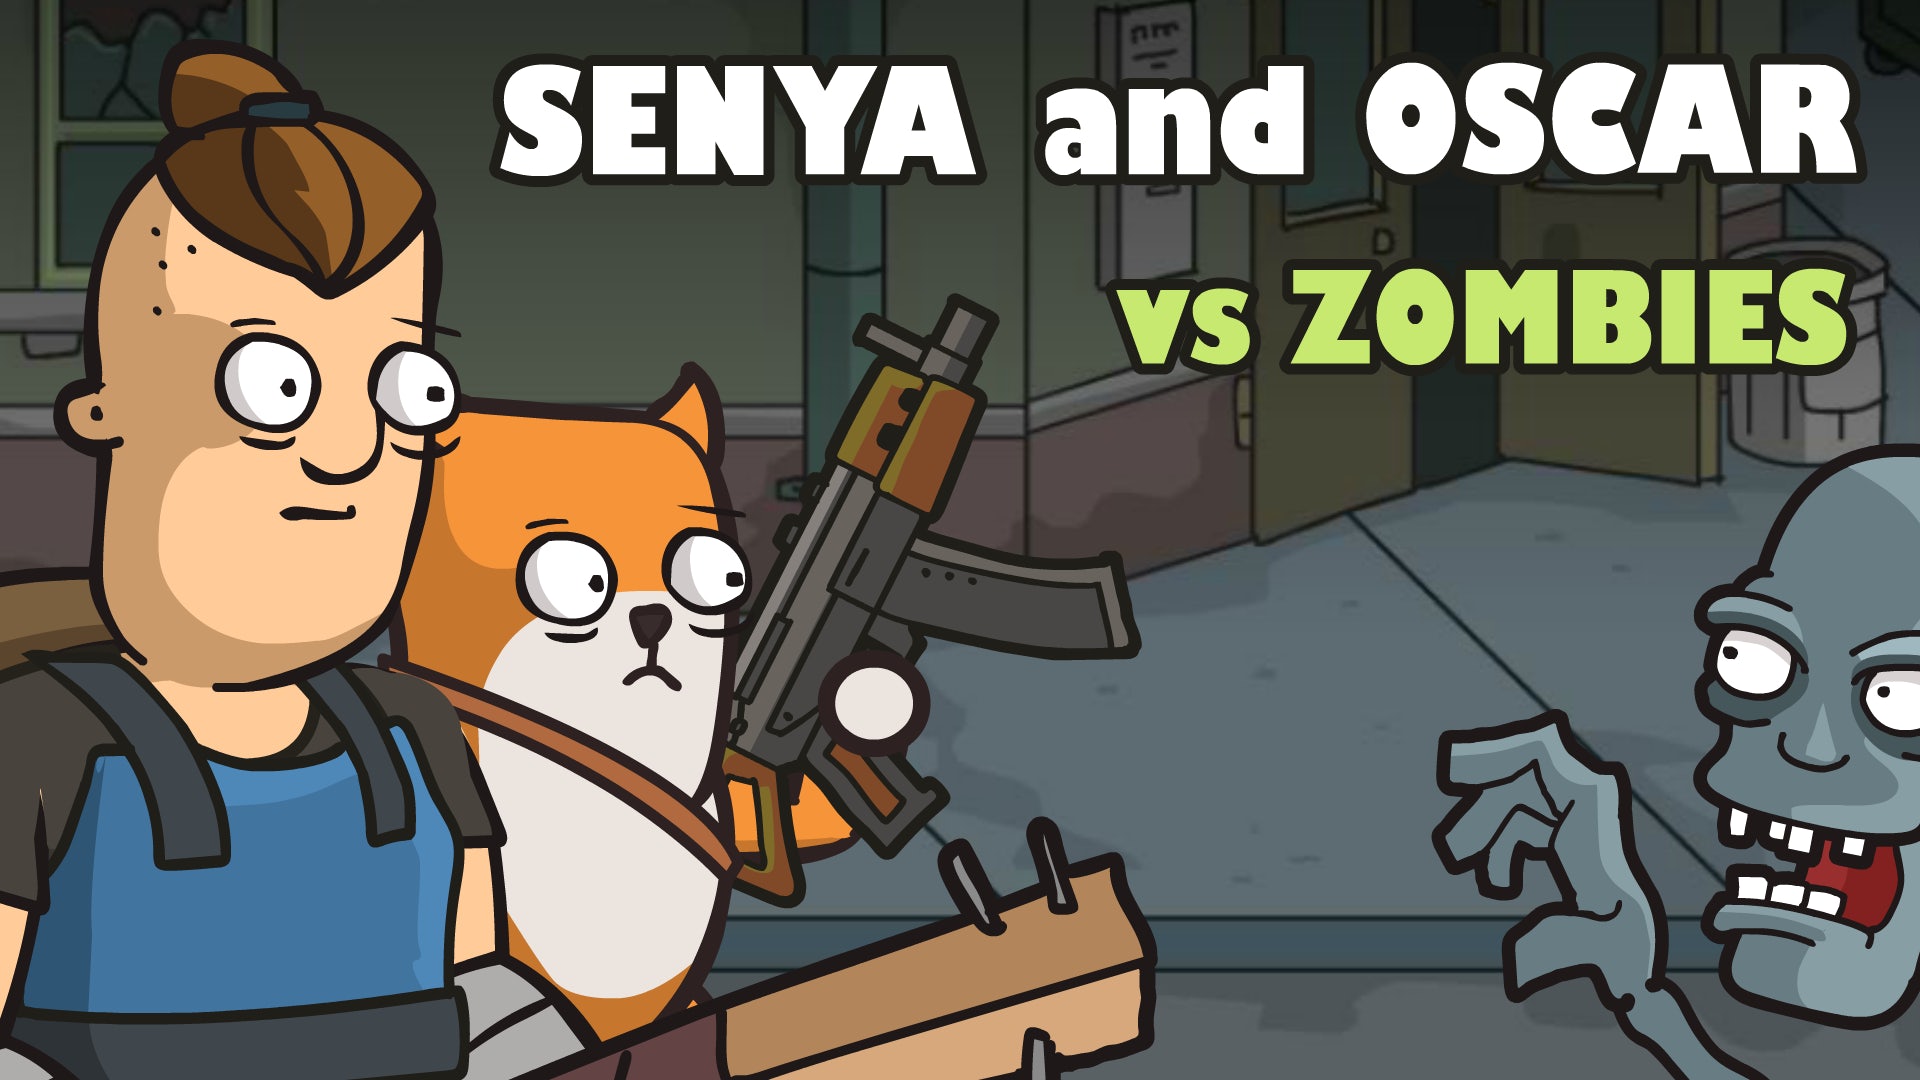 Senya and Oscar vs Zombies